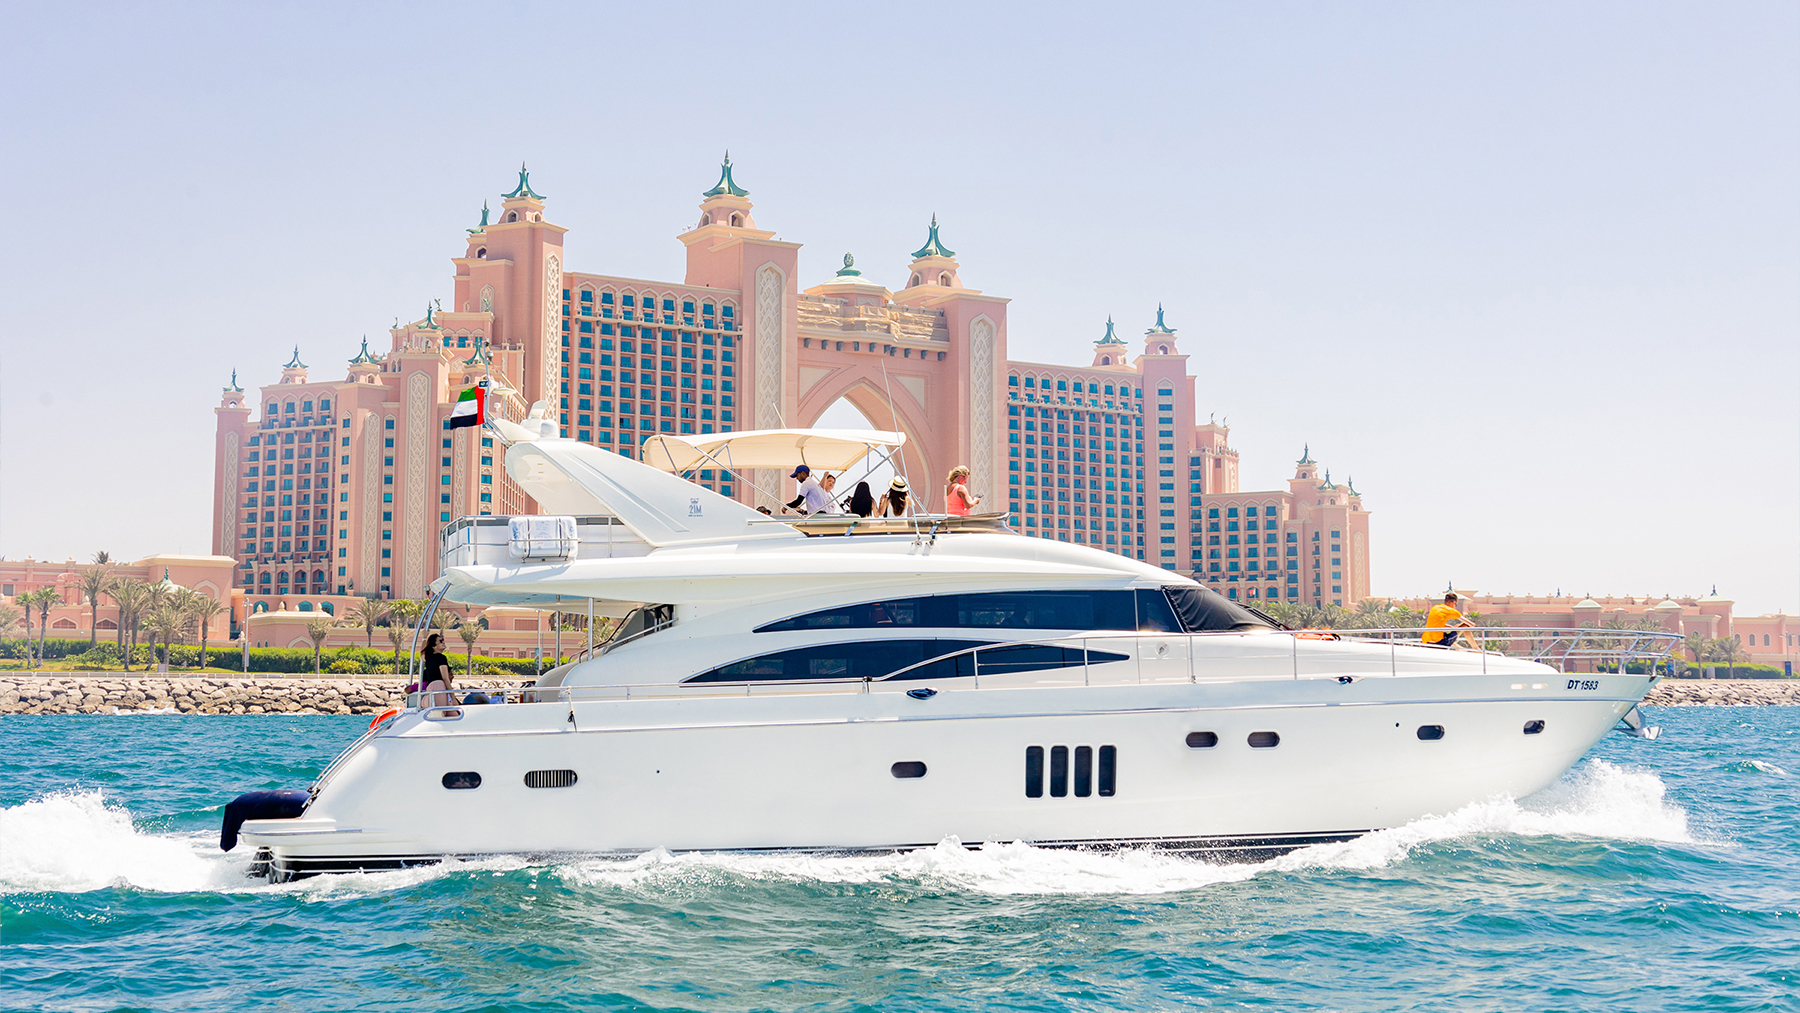 The Dubai Luxury Yacht Tour with BBQ in Dubai